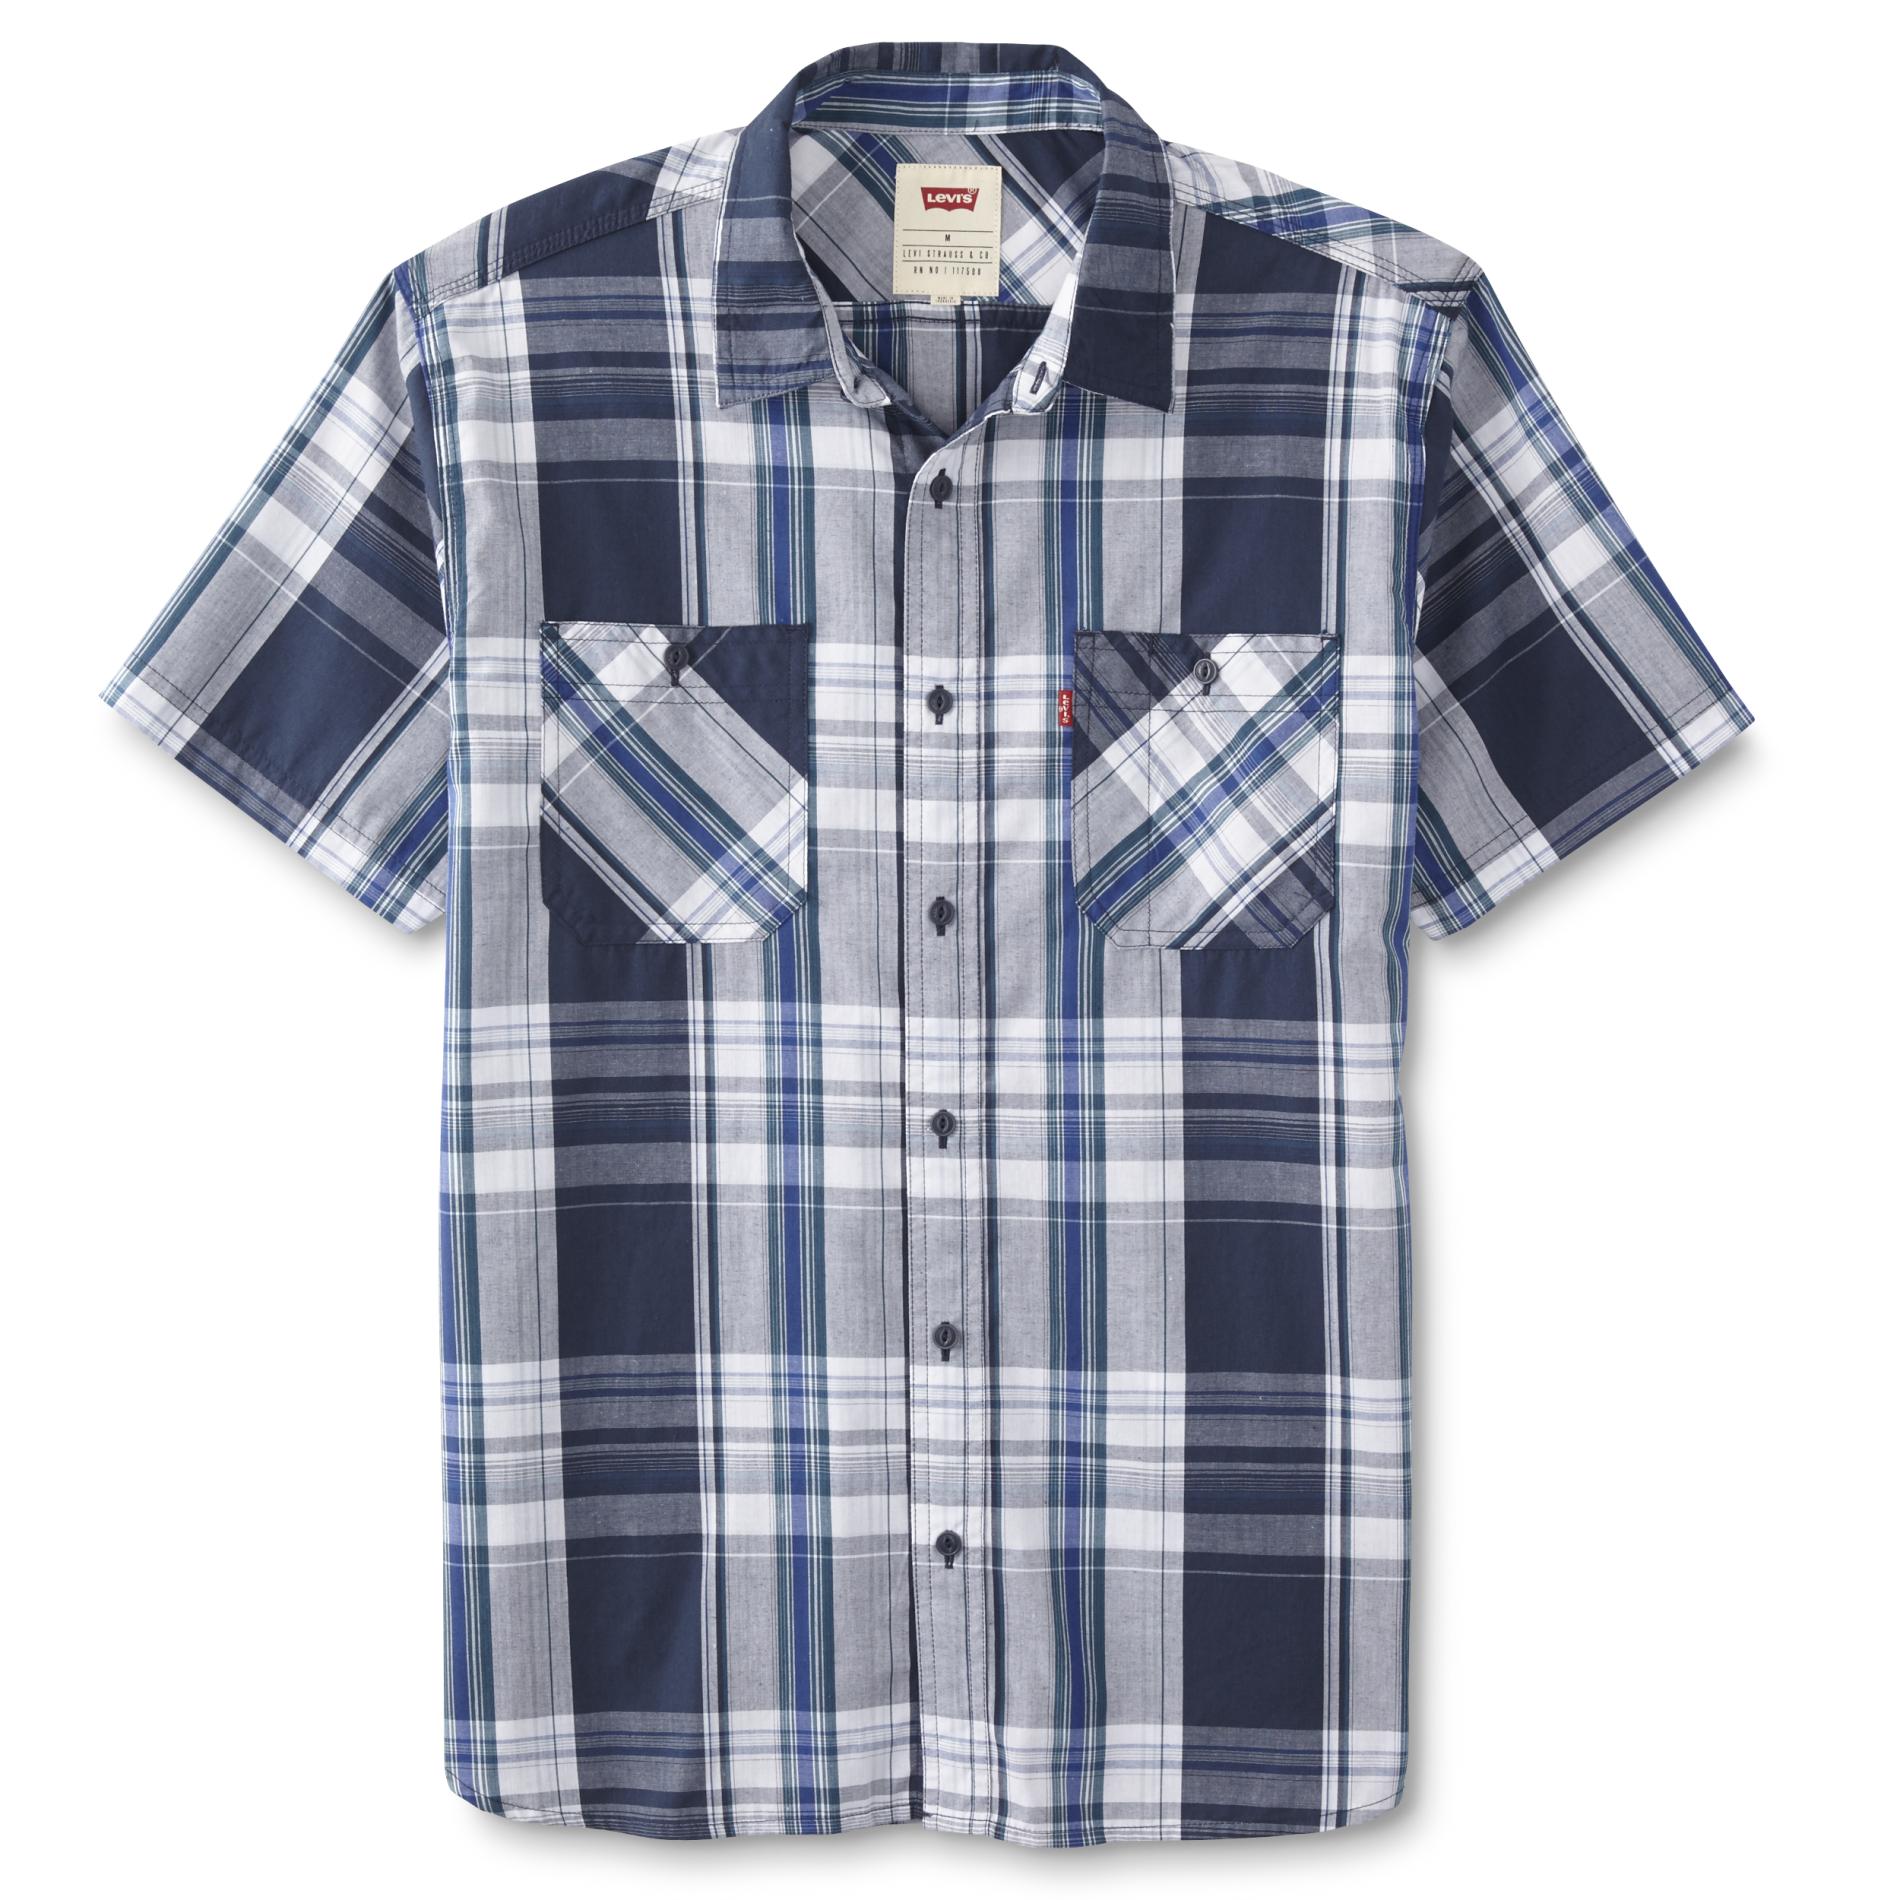 Levi's Men's Short-Sleeve Shirt - Plaid